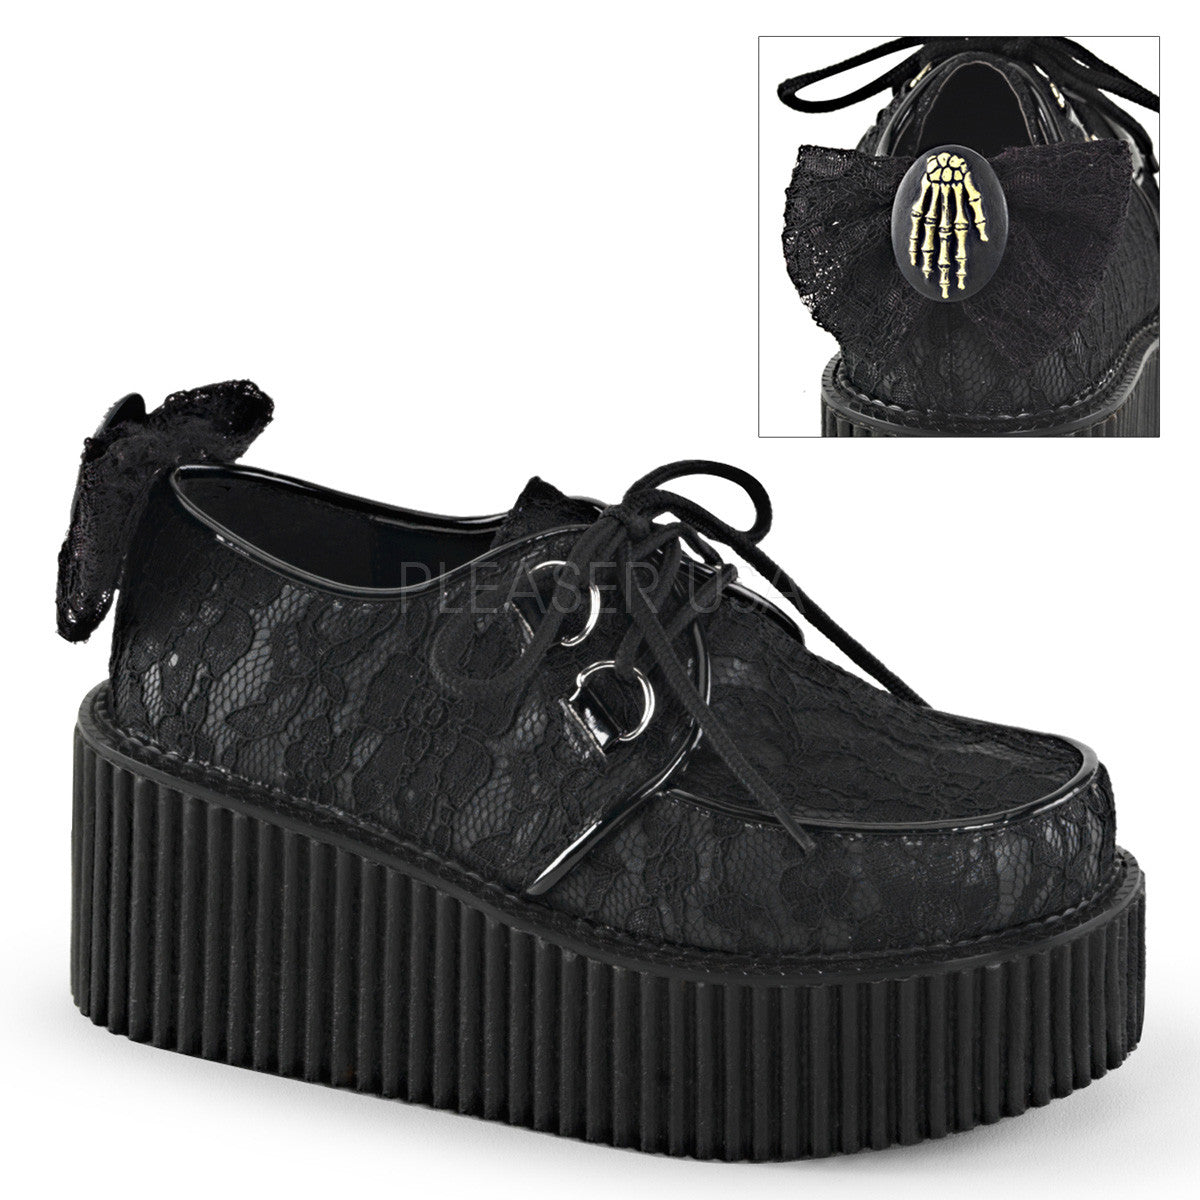 Demonia,Demonia CREEPER-212 Black Vegan Leather Creepers - Shoecup.com